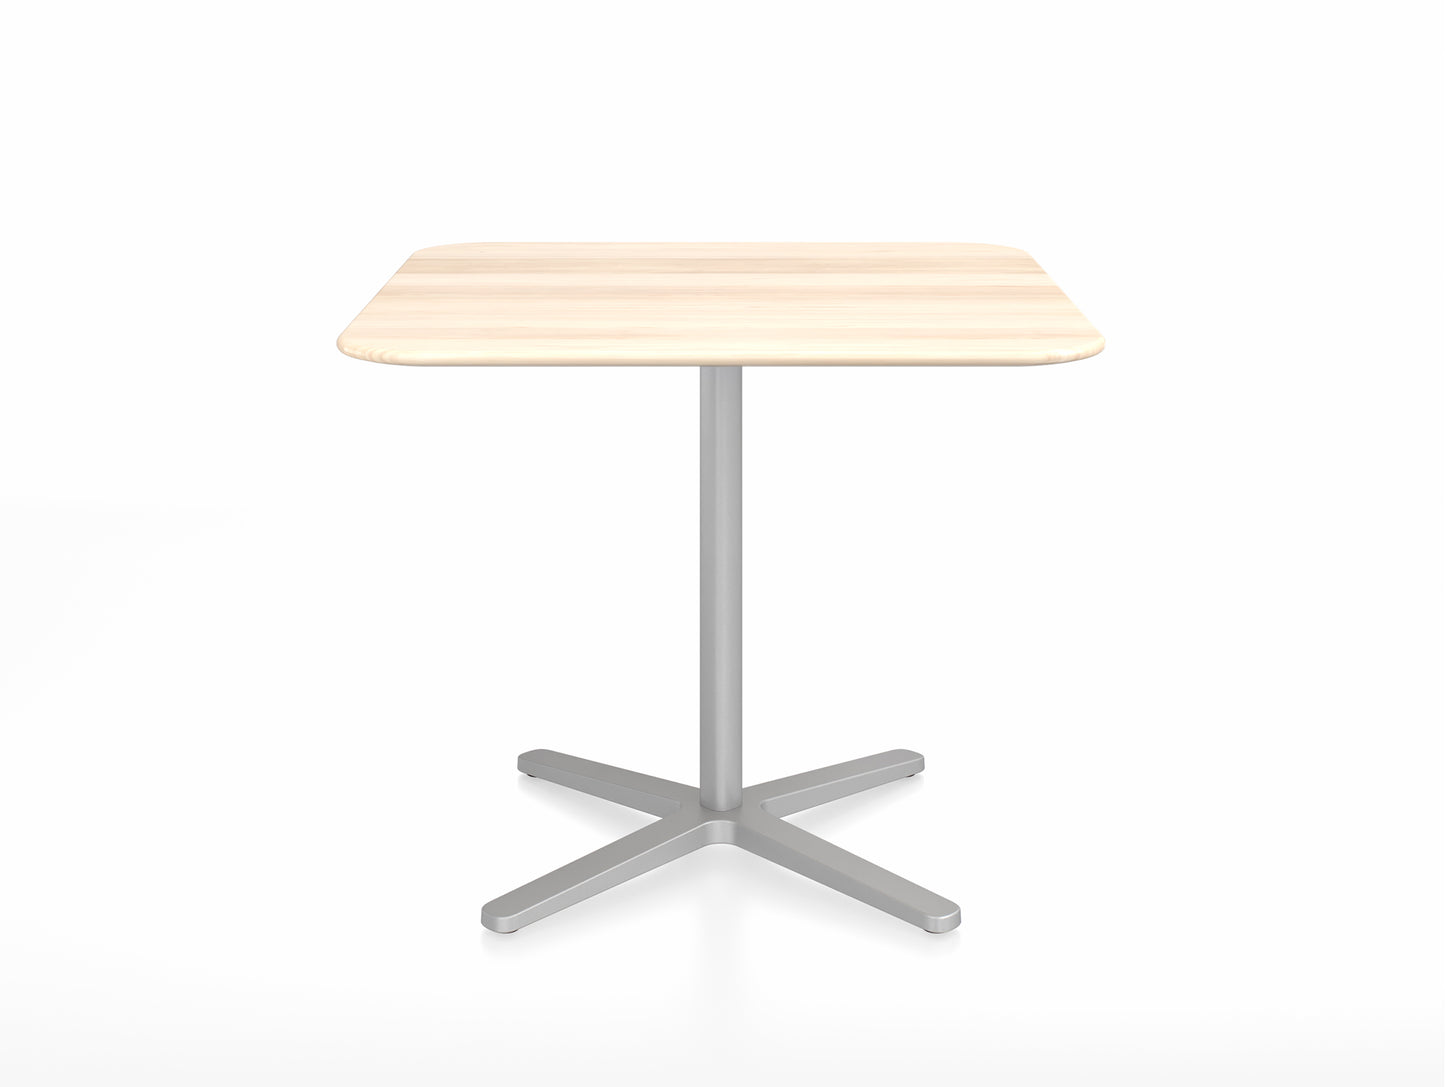 2 Inch Outdoor Cafe Table - X Base by Emeco - Accoya Wood Top / Aluminium Base / 91x91